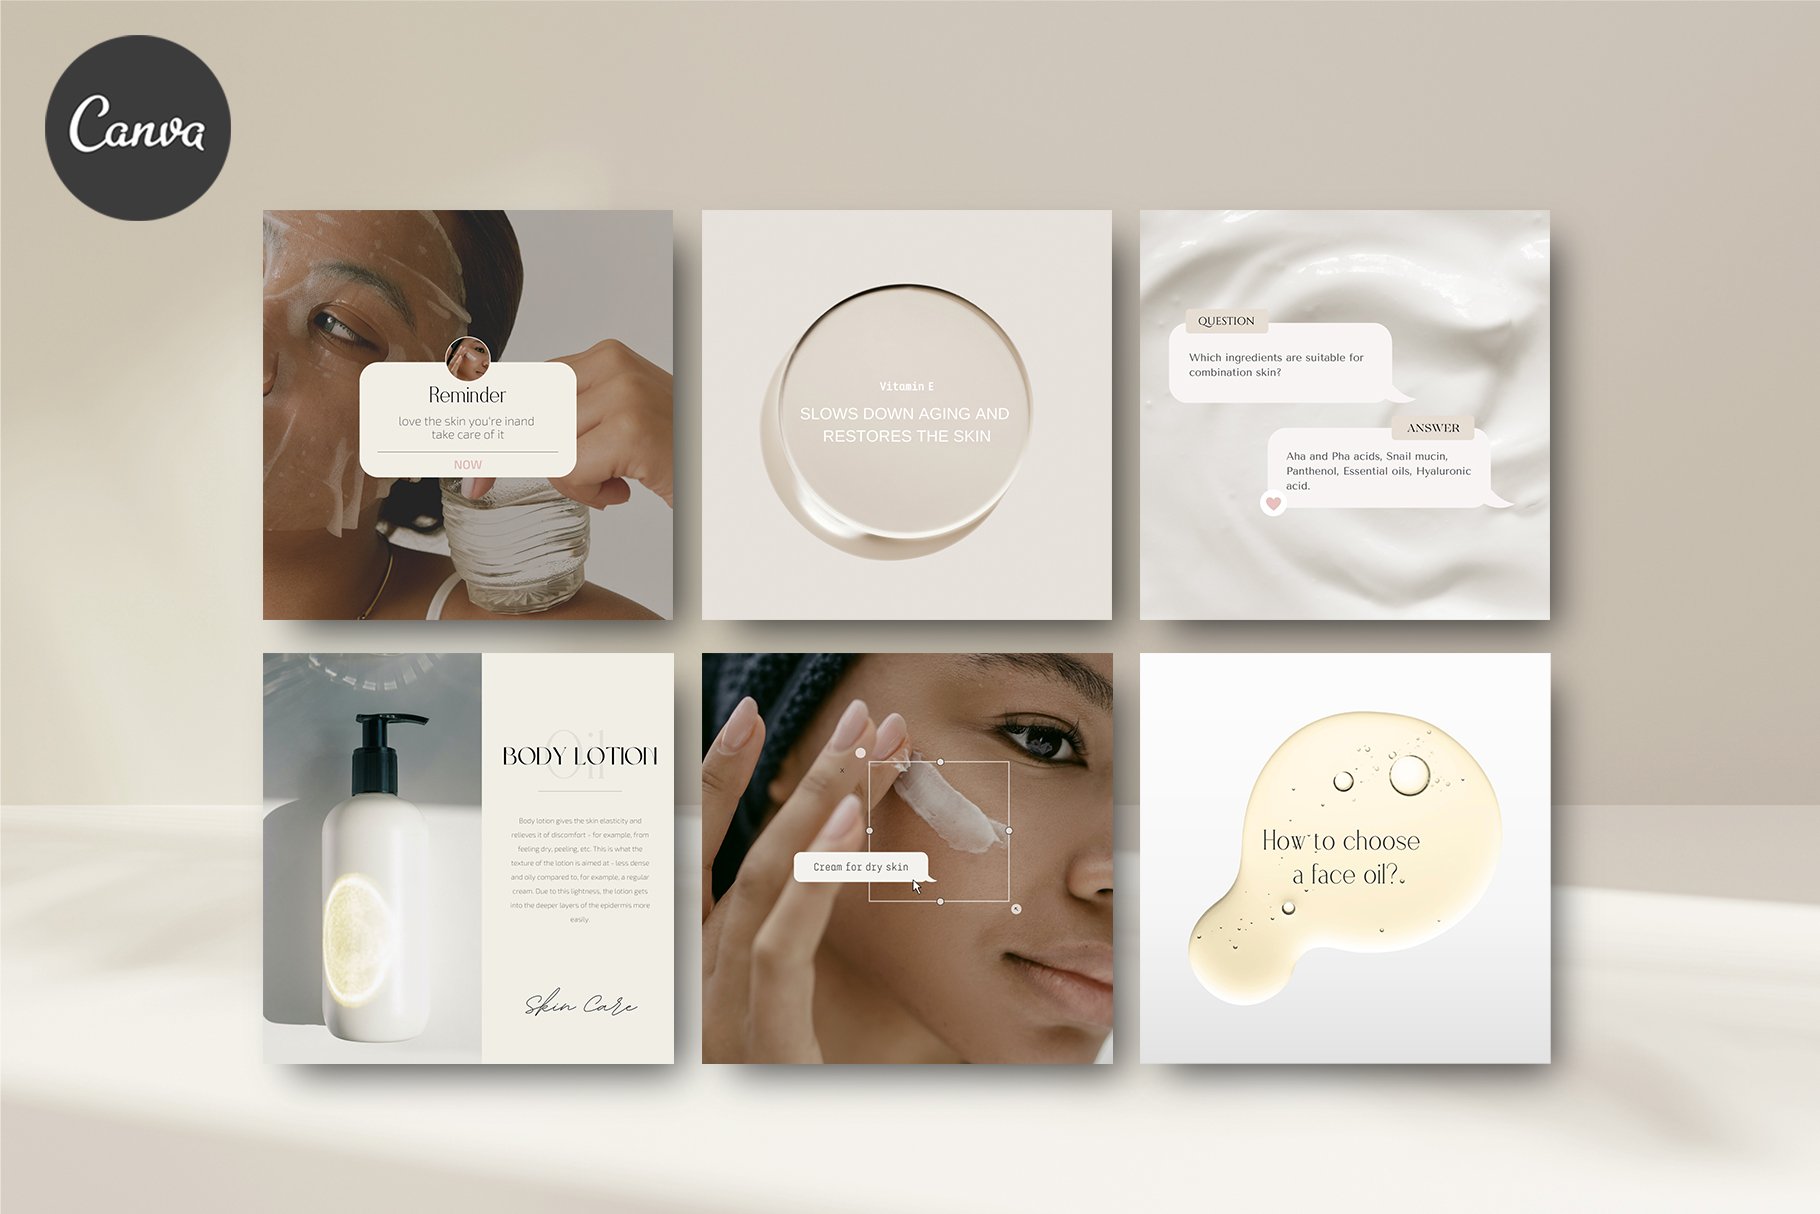 CANVA / Skin Care Social Media Pack cover image.